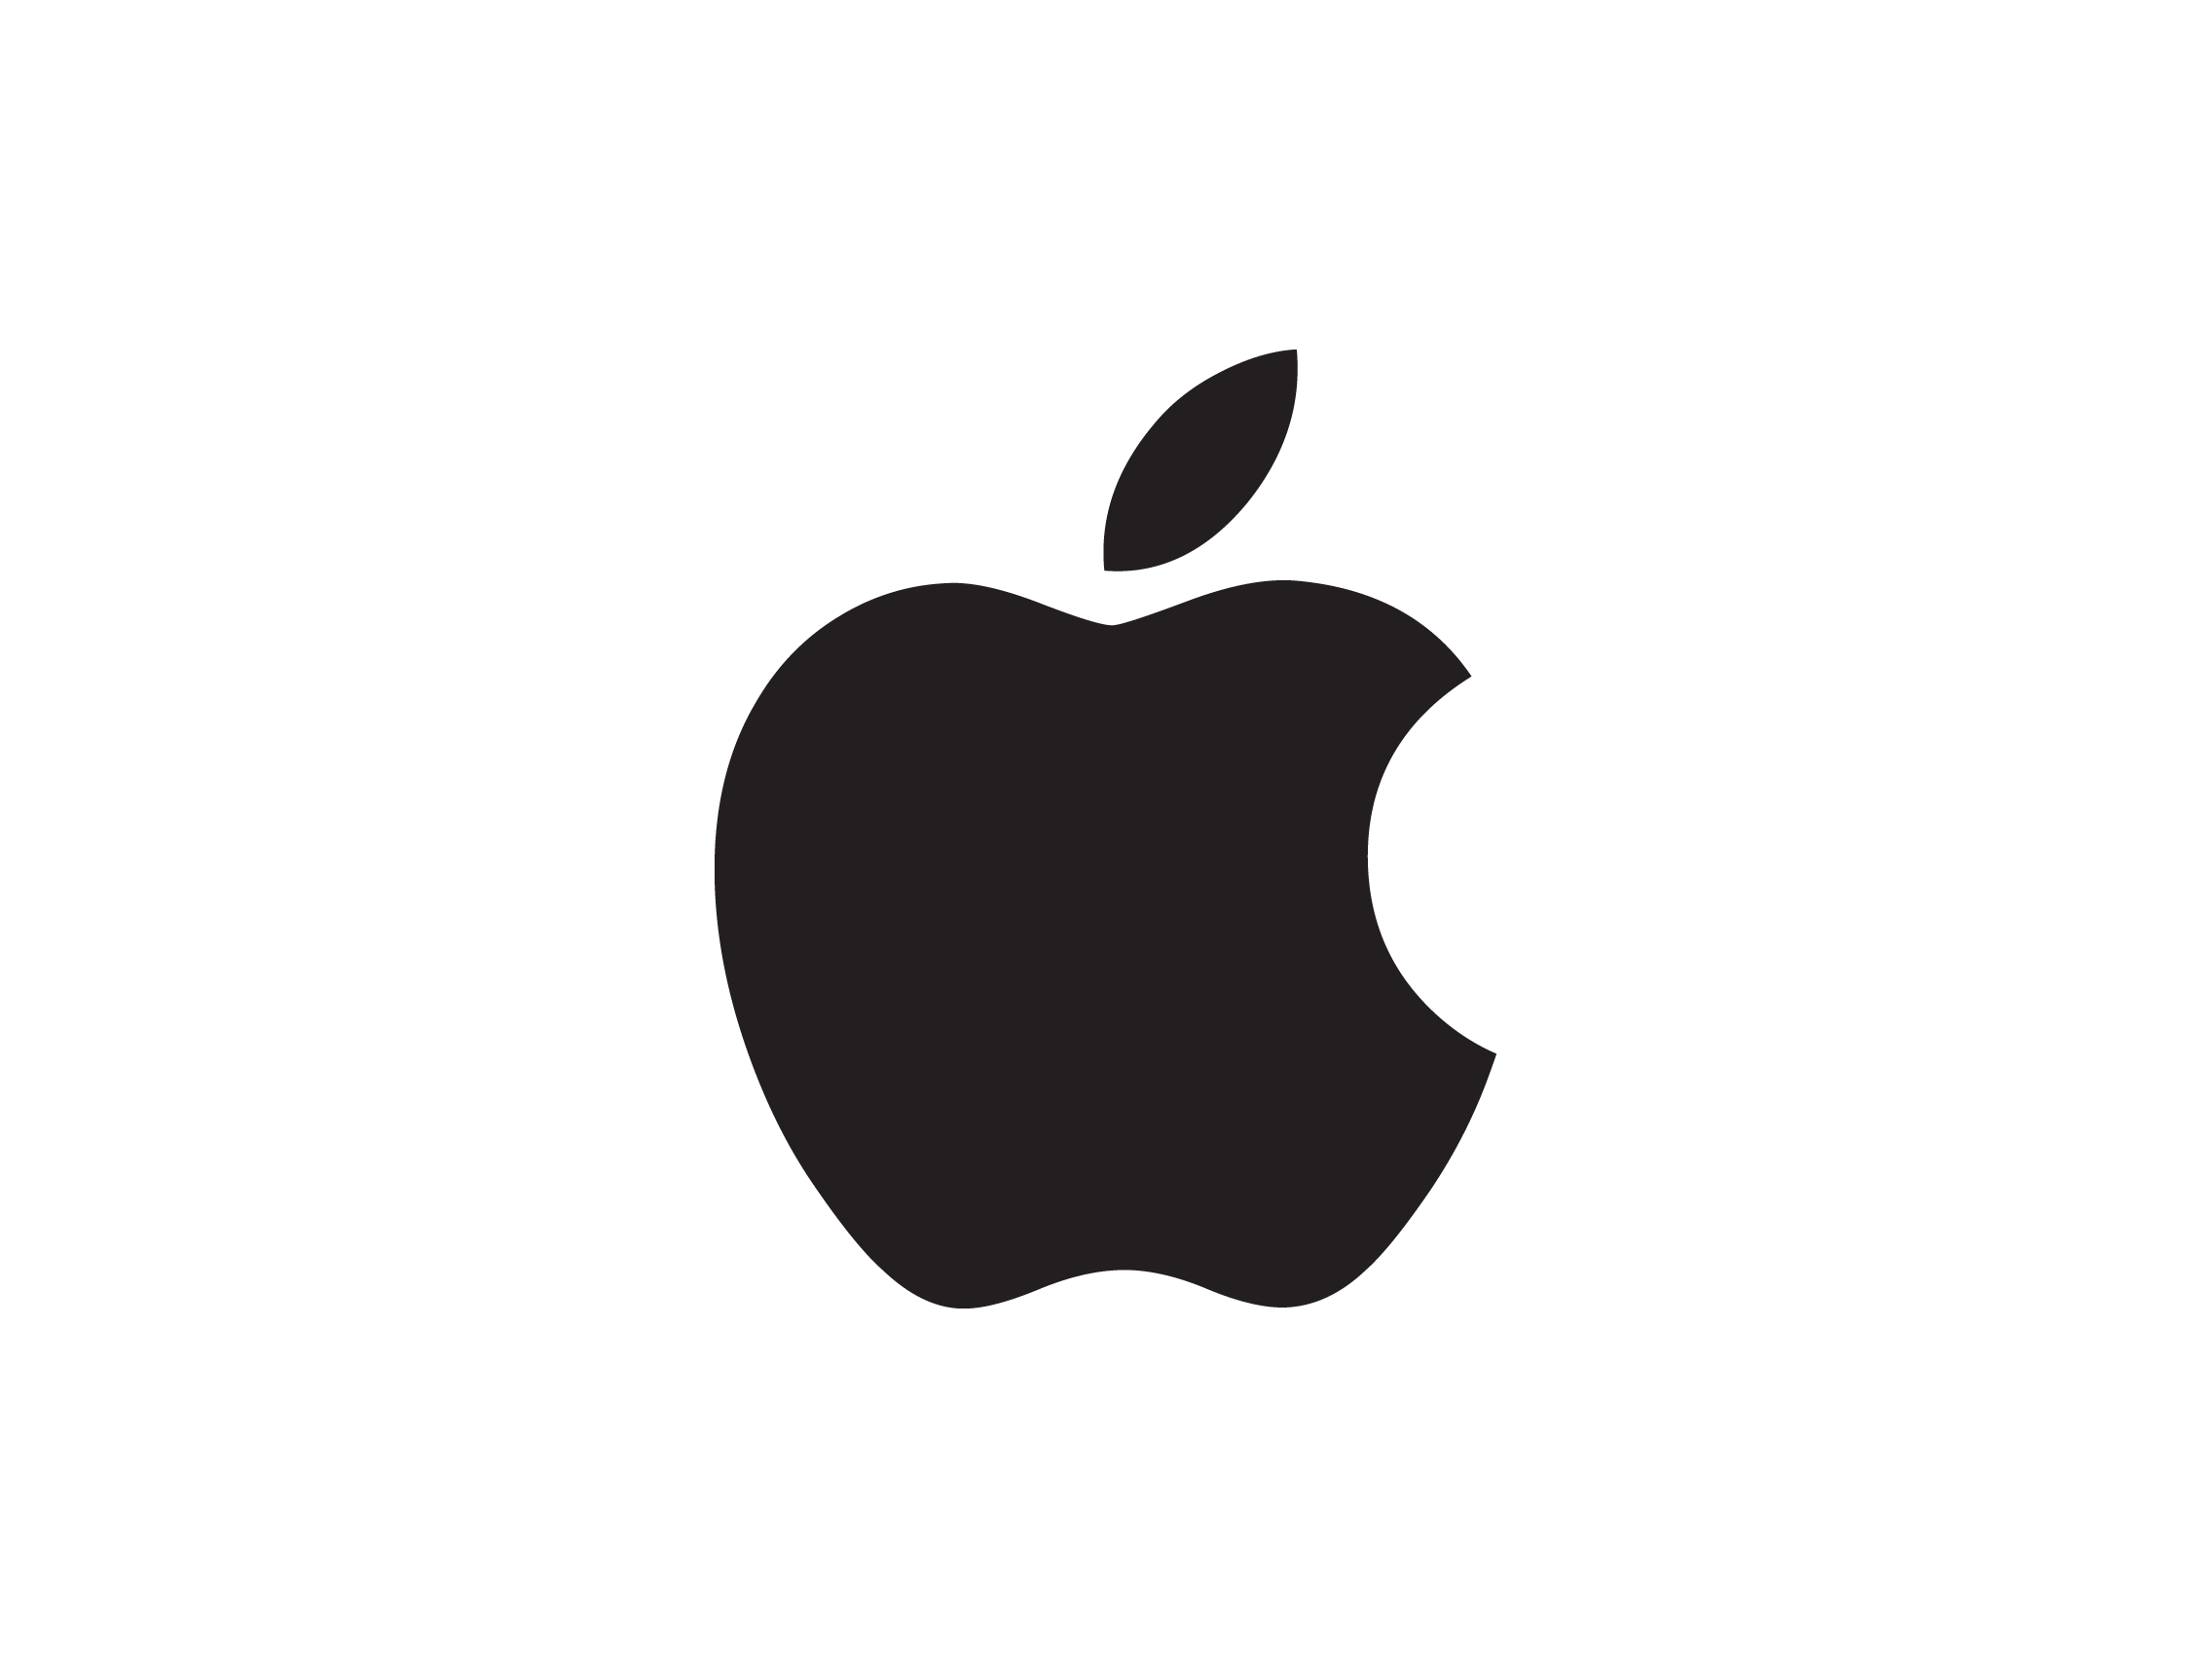 White On Black Background Apple Logo - Apple logo png transparent background for free download on YA